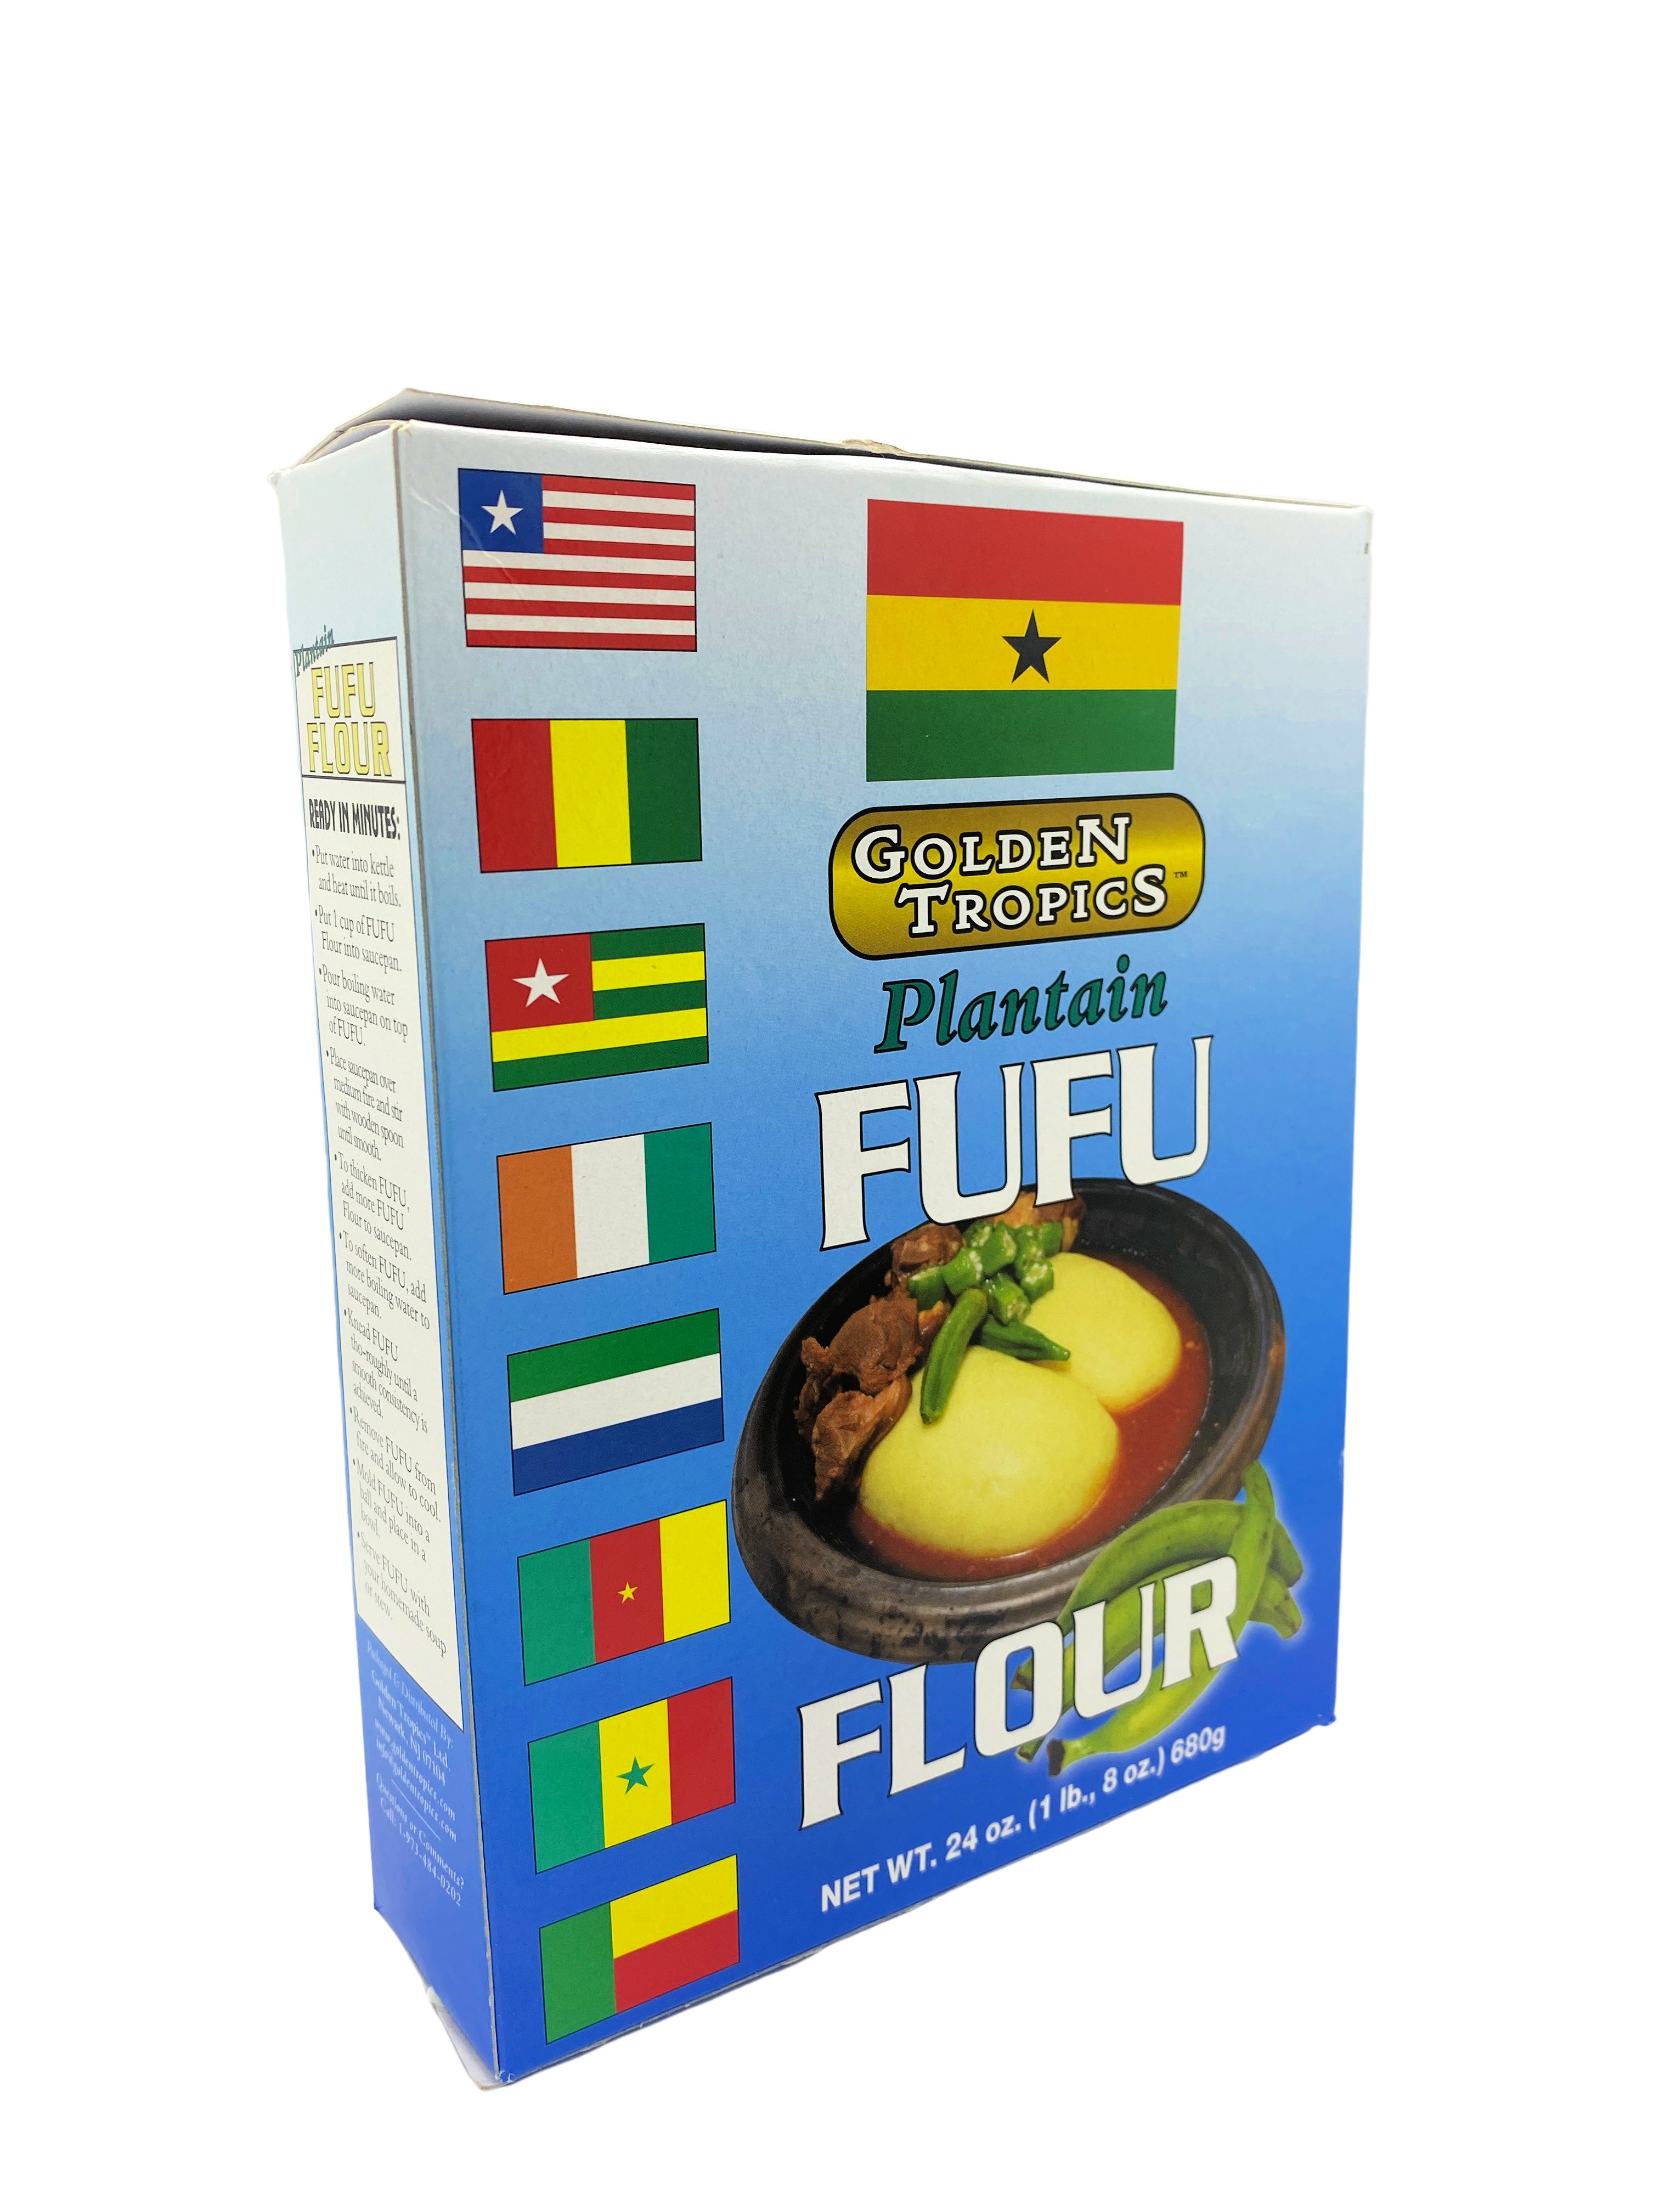 Golden Tropics - Plantain Fufu Flour